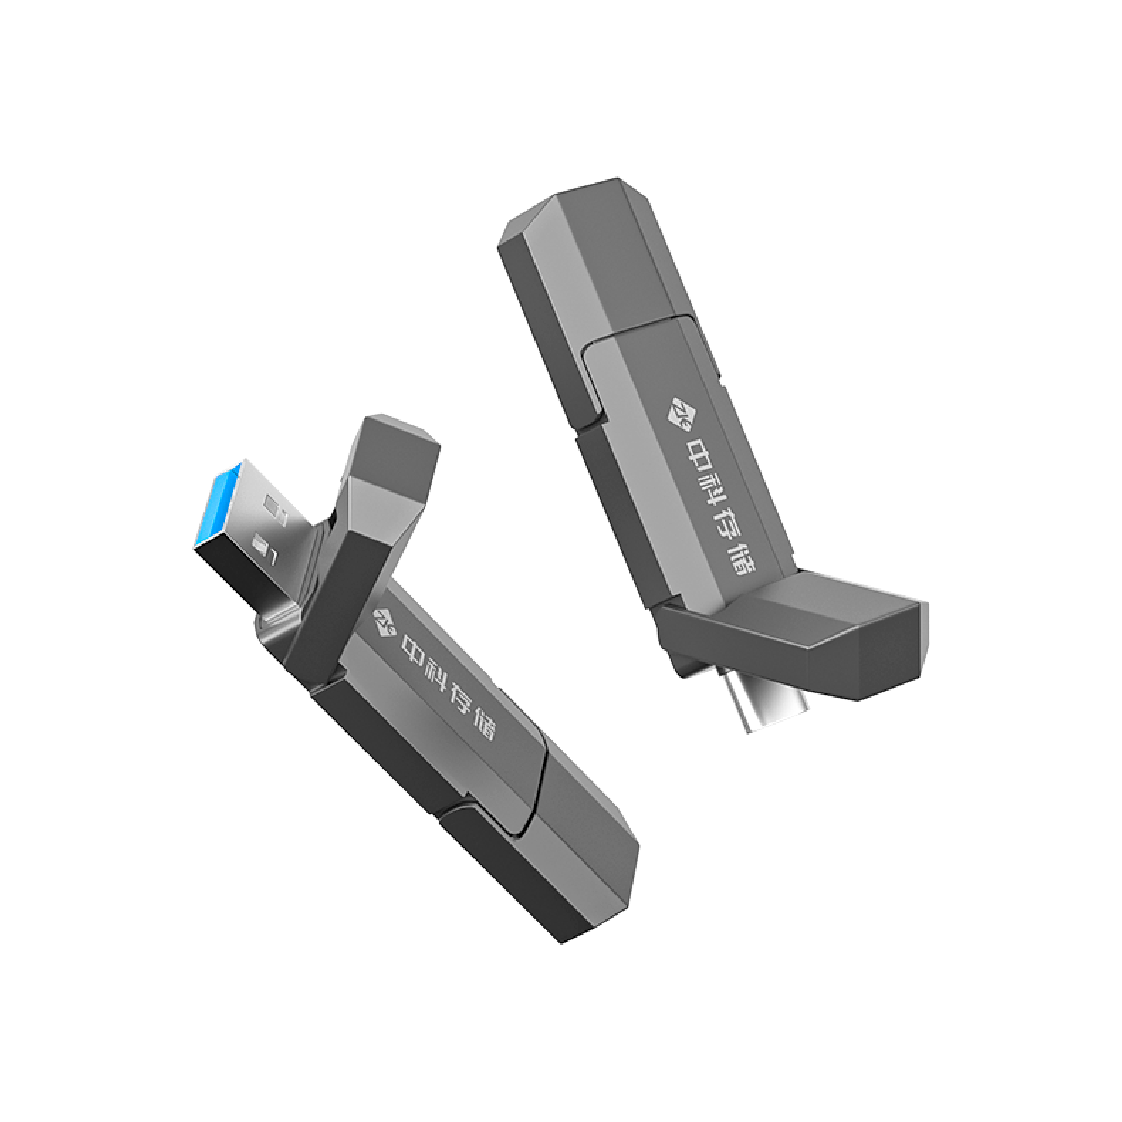 中科存 ZKUYV USB 3.2 U盘 银龙灰 128GB Type-C/USB-A双口 83.75元